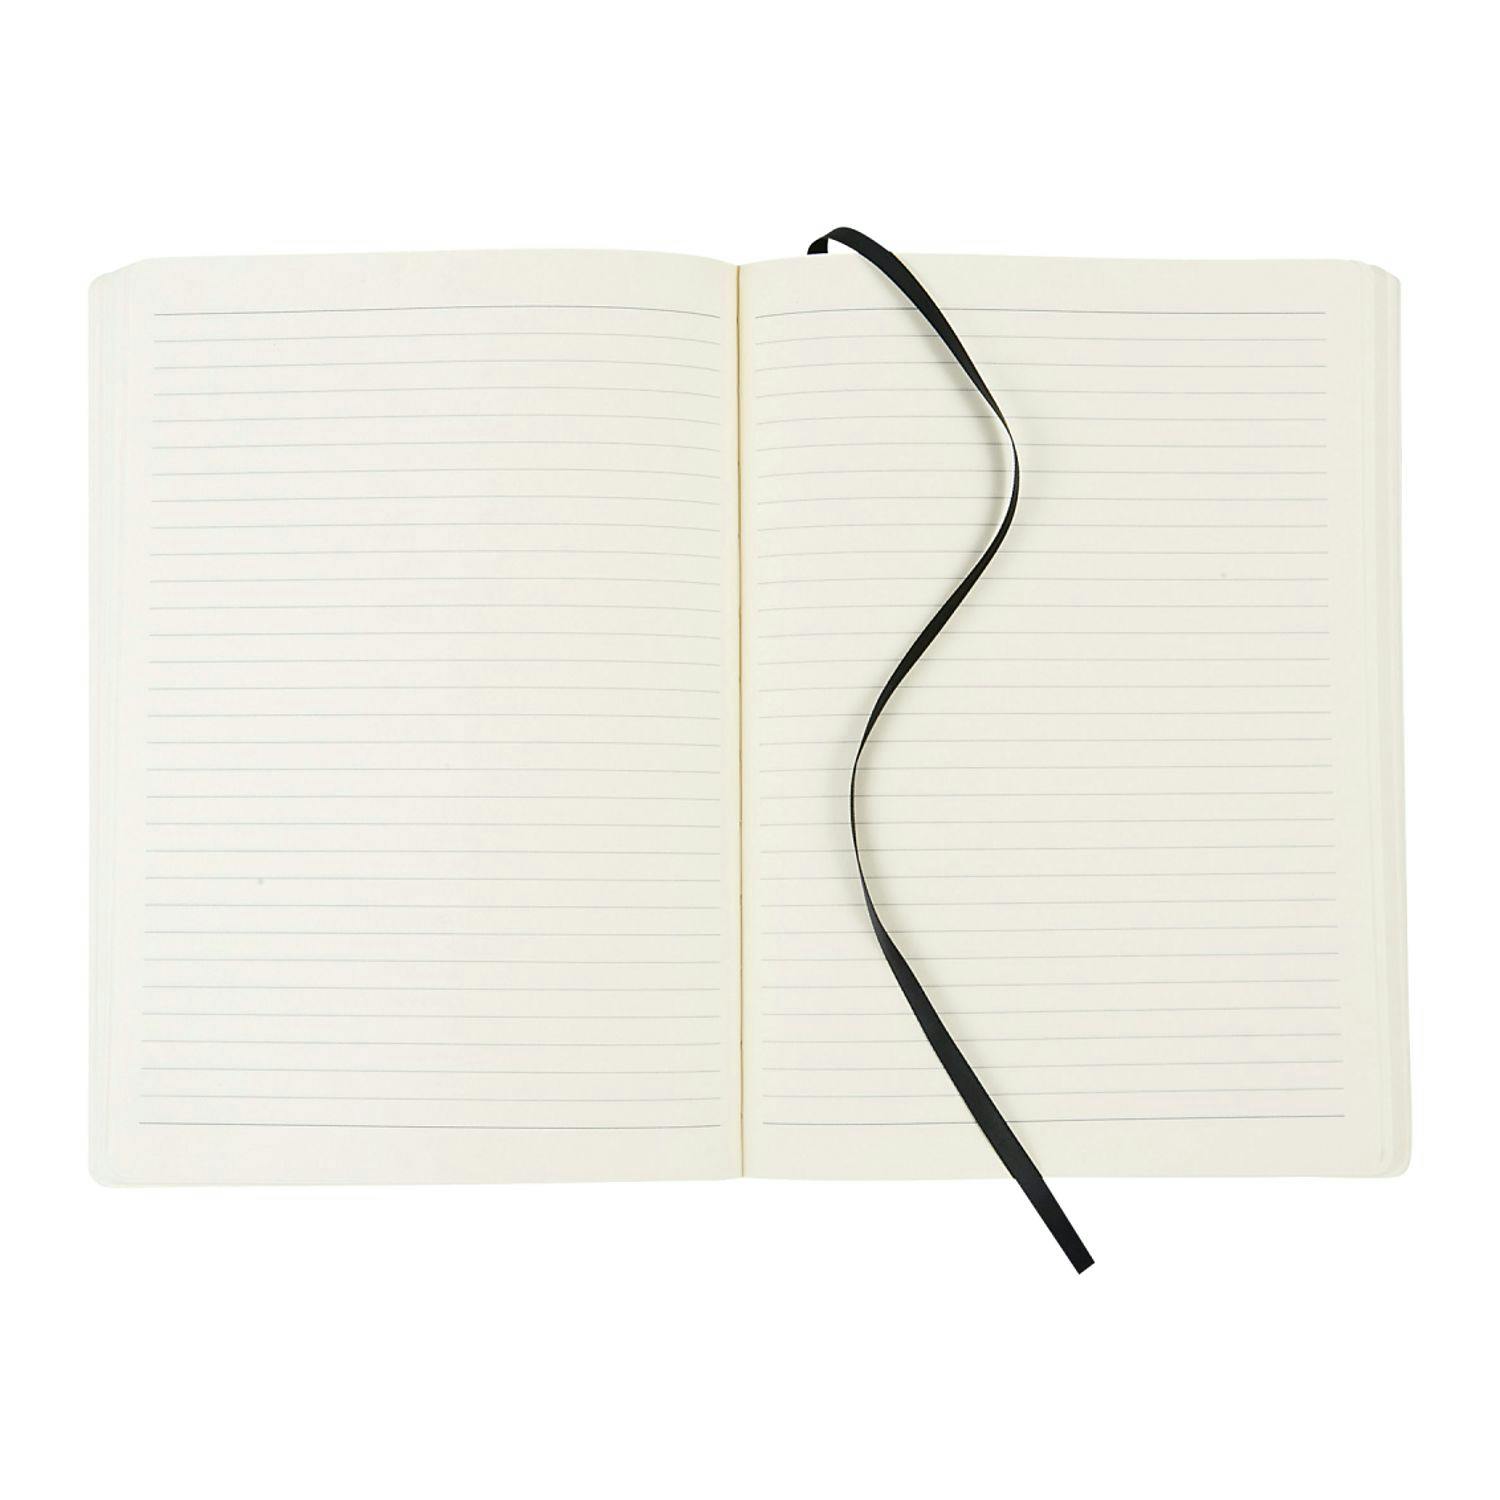 6.75" x 9.5" Pedova™ Large Ultra Soft JournalBook® - additional Image 1